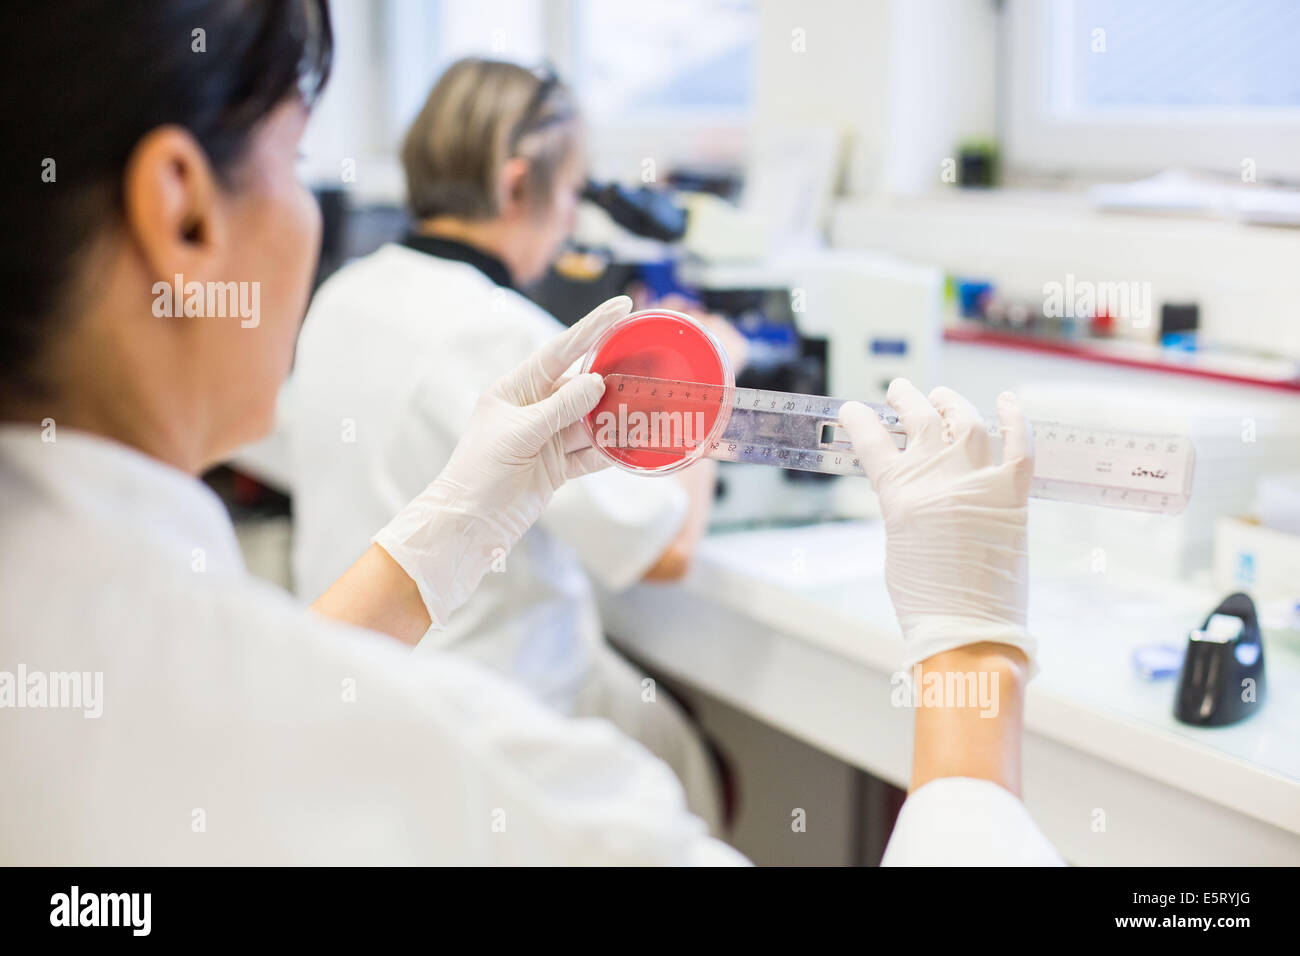 Female technician measuring a bacterial culture in a petri dish in a medical laboratory. Stock Photo